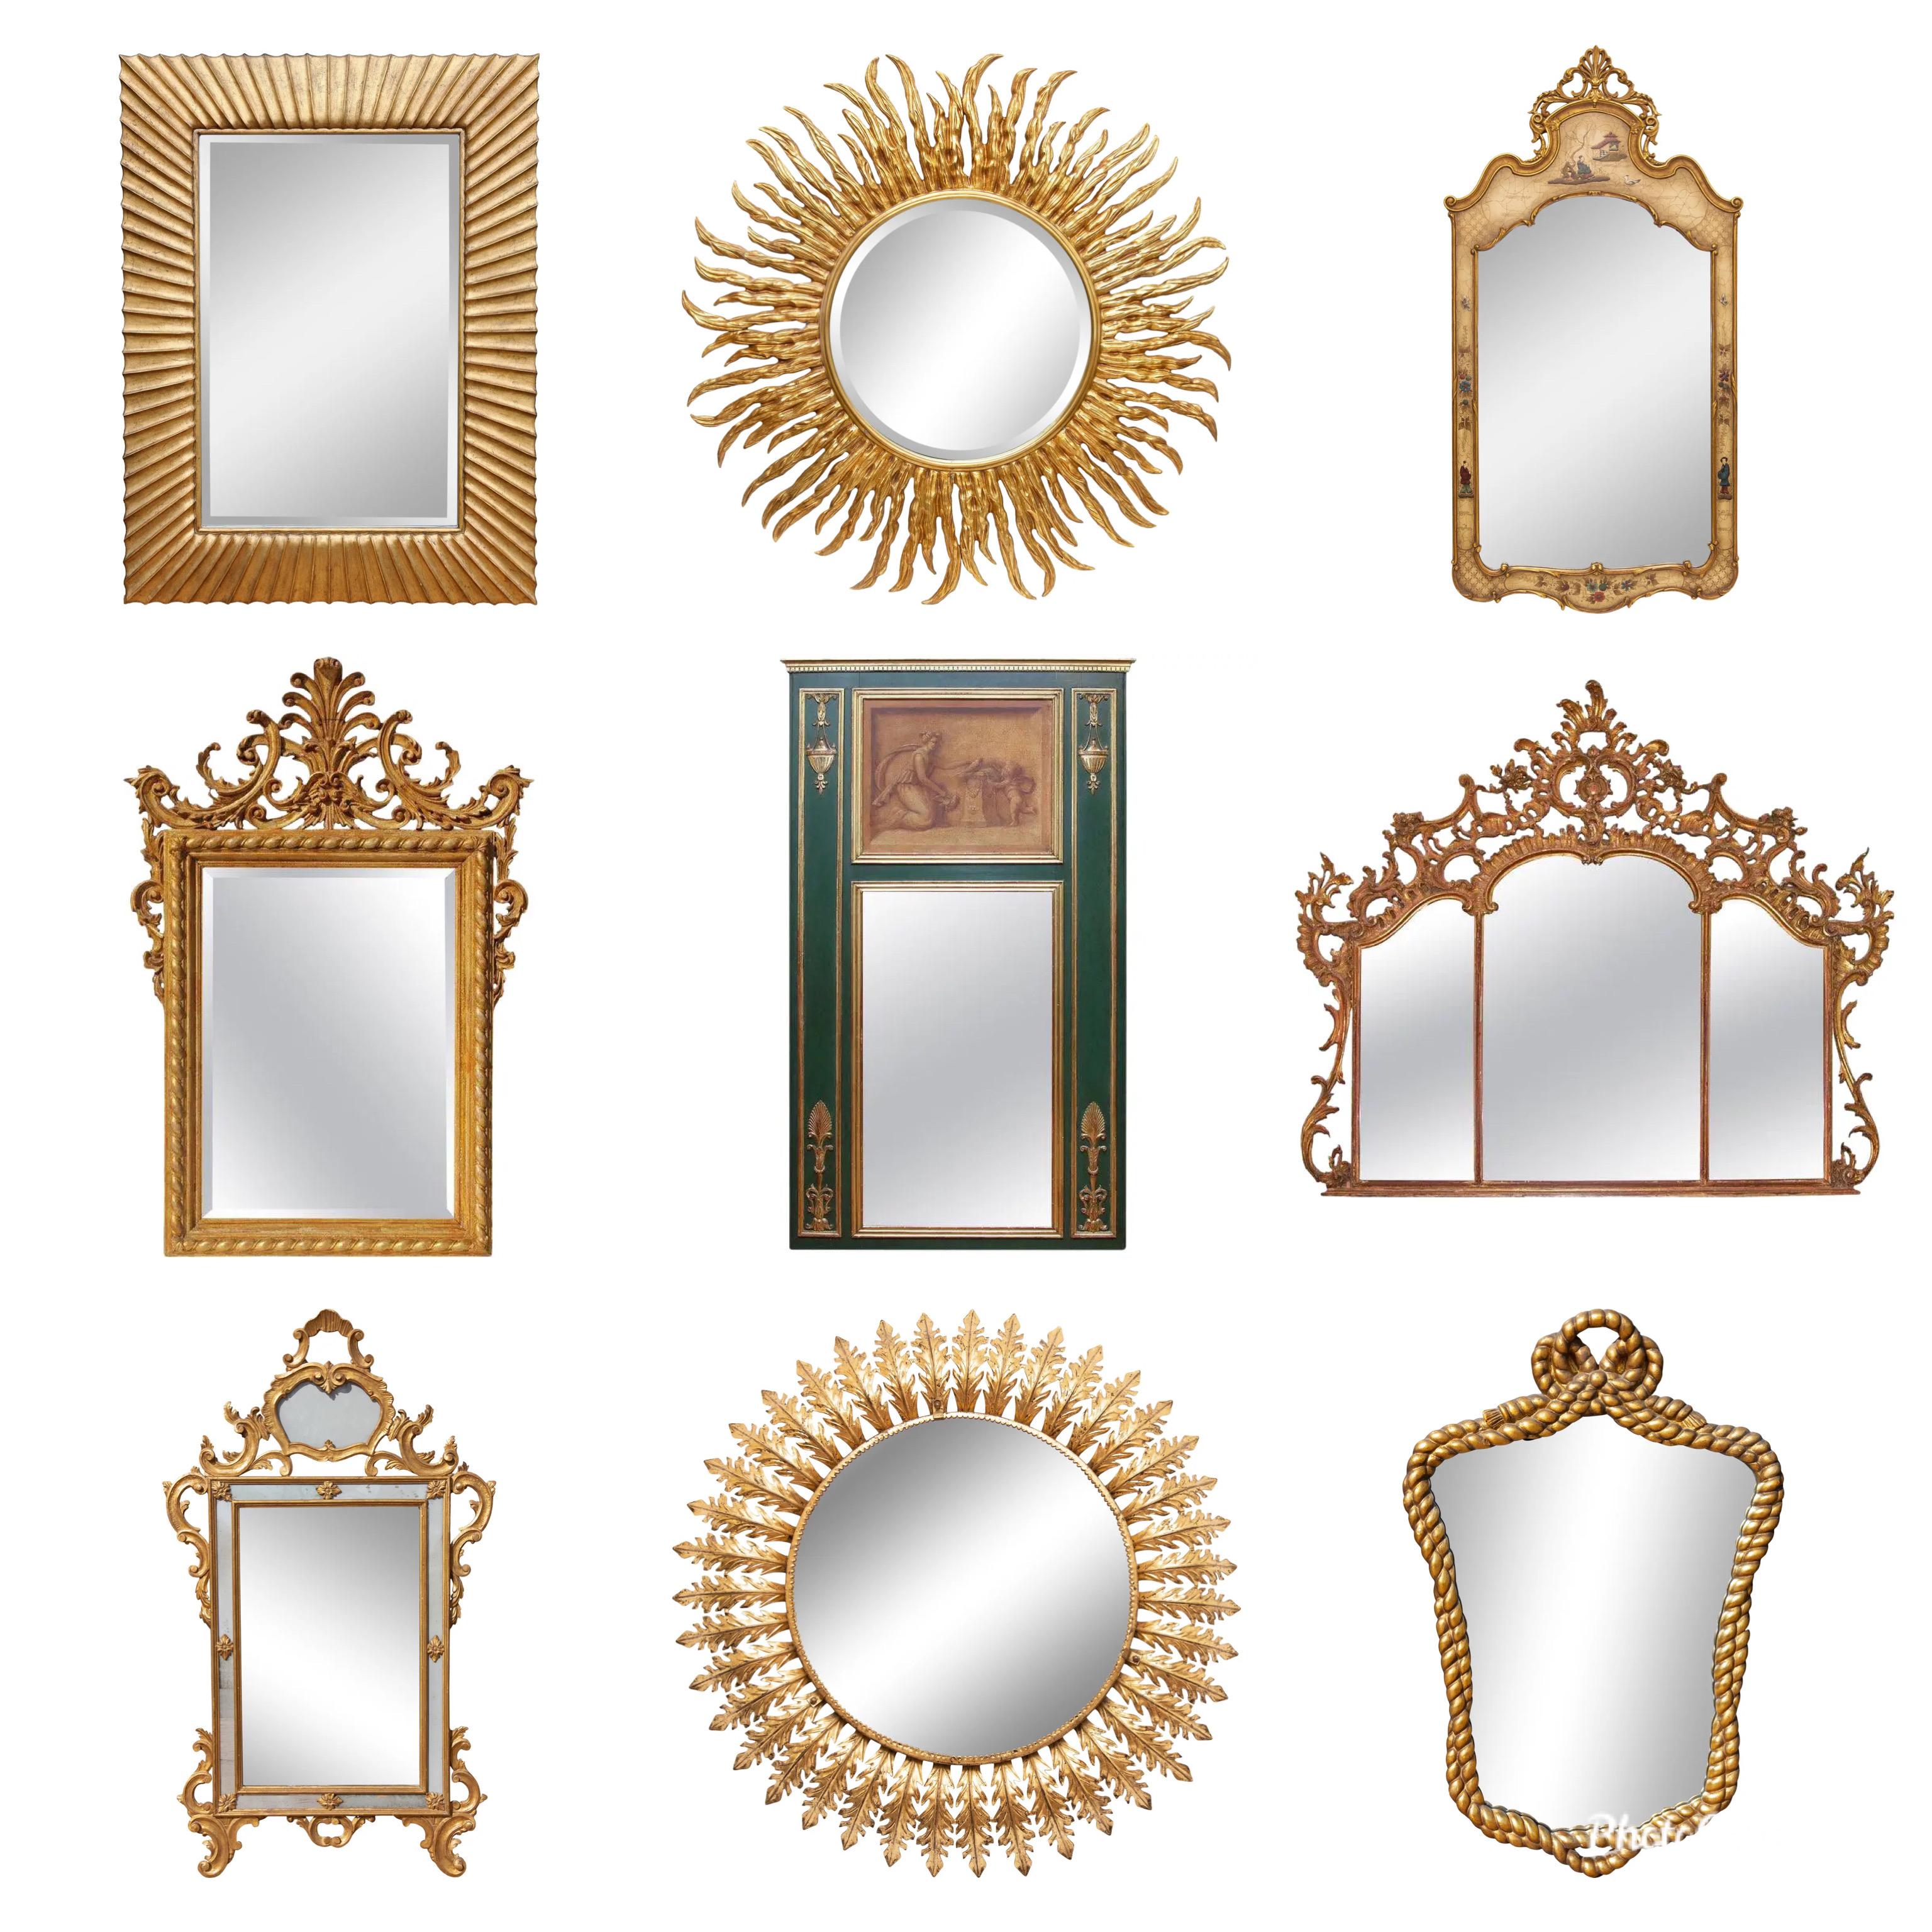 Neoclassical Revival Italian Neoclassical Gilt Mirror